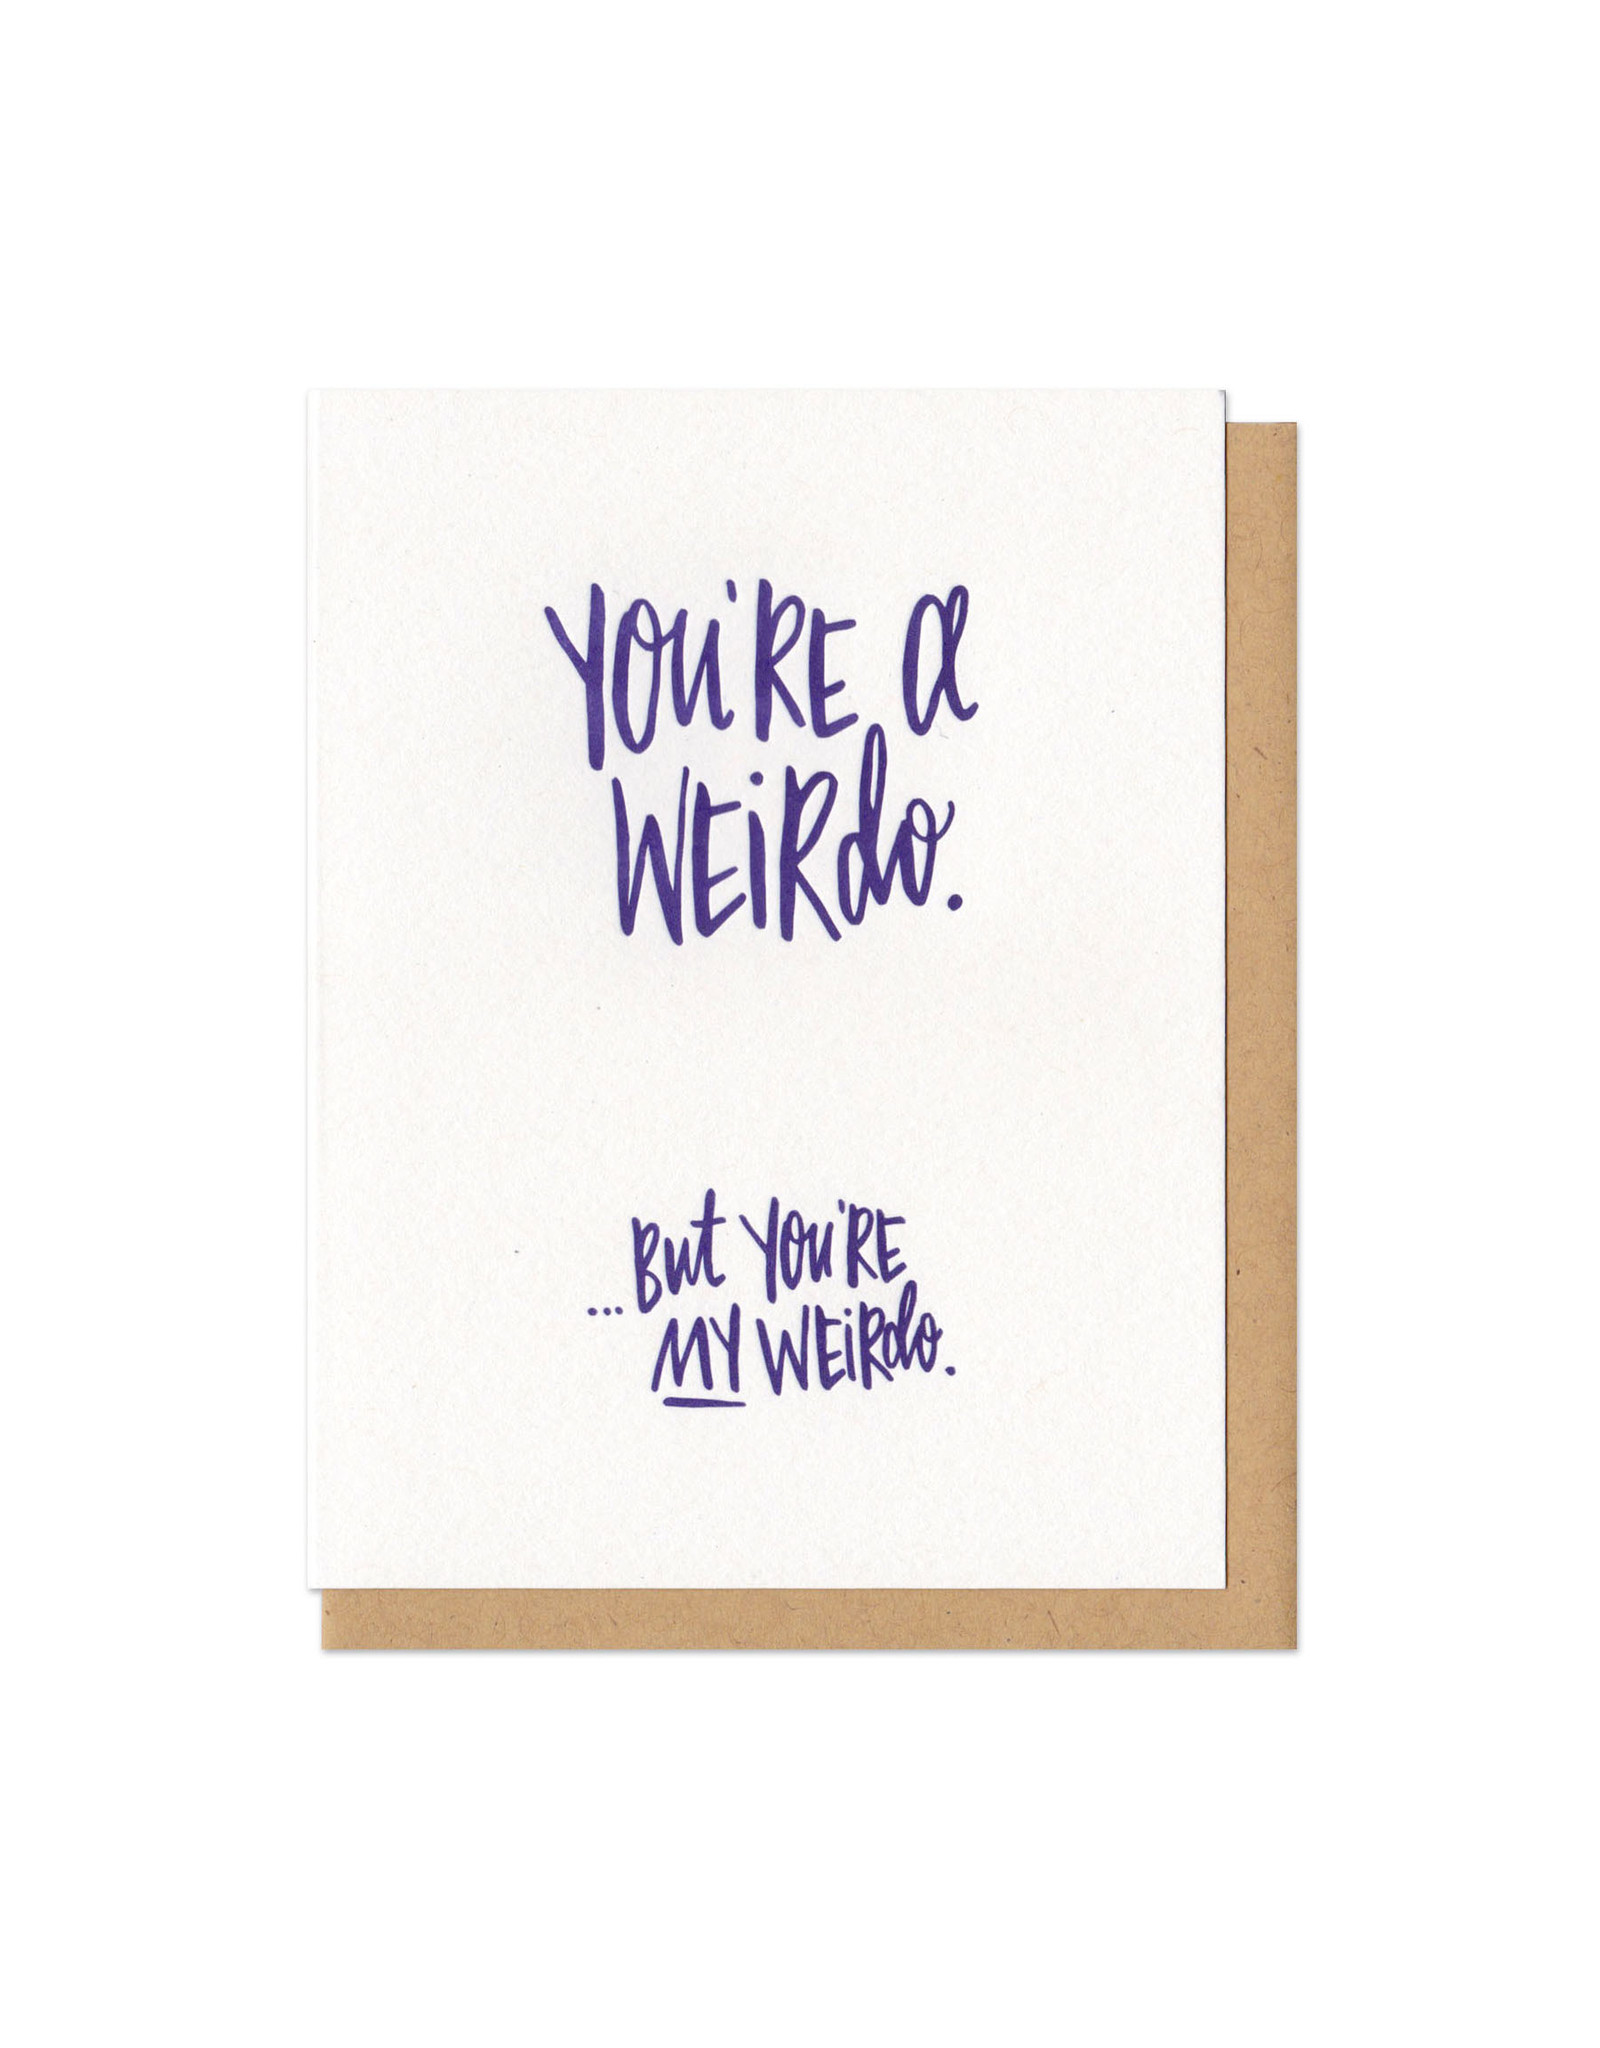 You're a Weirdo, But You're My Weirdo Greeting Card